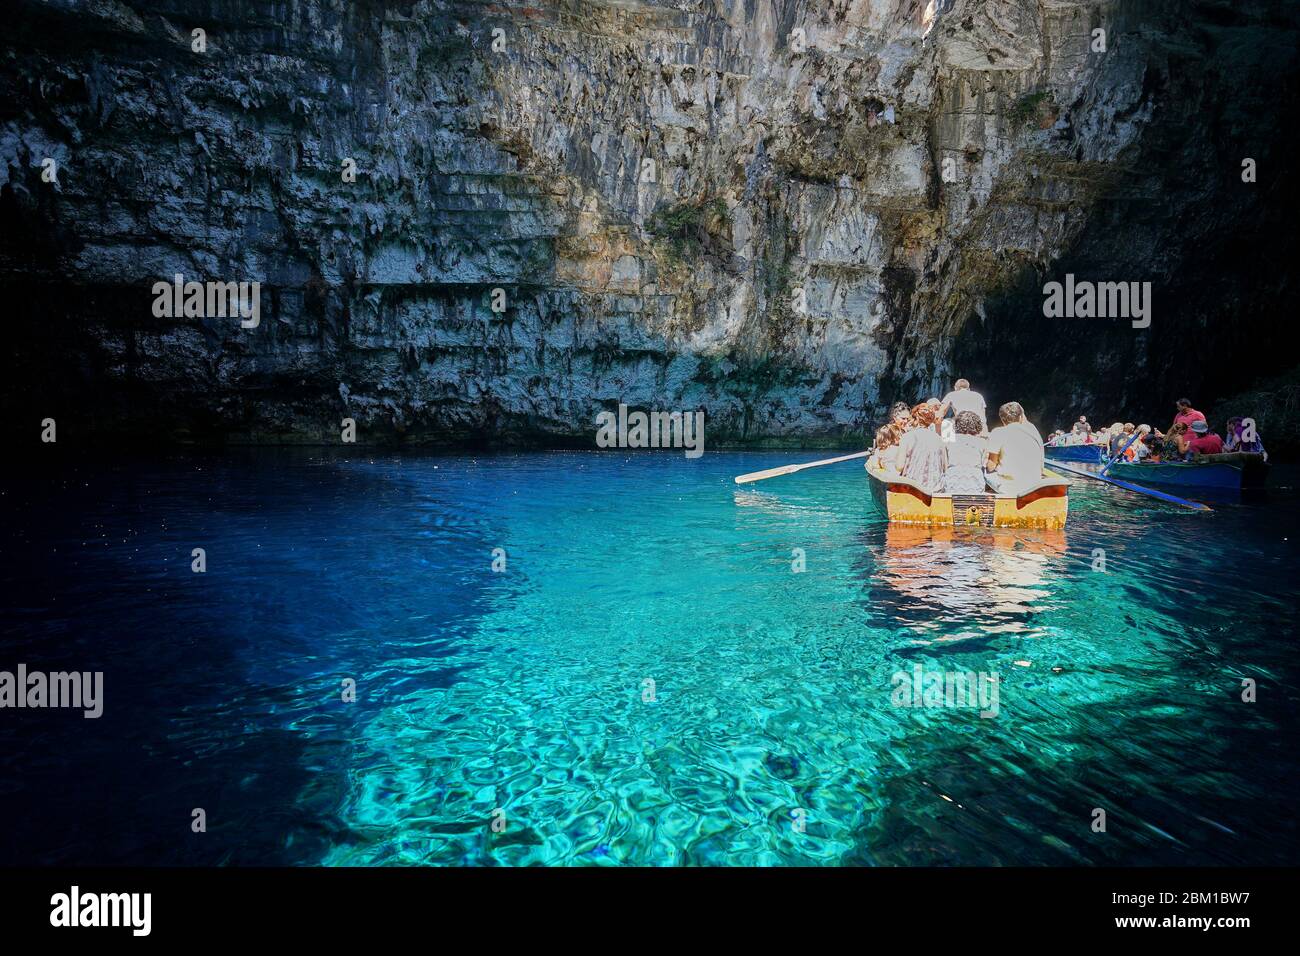 Boats in Melissani Cave / Lake in Kefalonia Island (Cephalonia), Ionian Sea, Greece Stock Photo